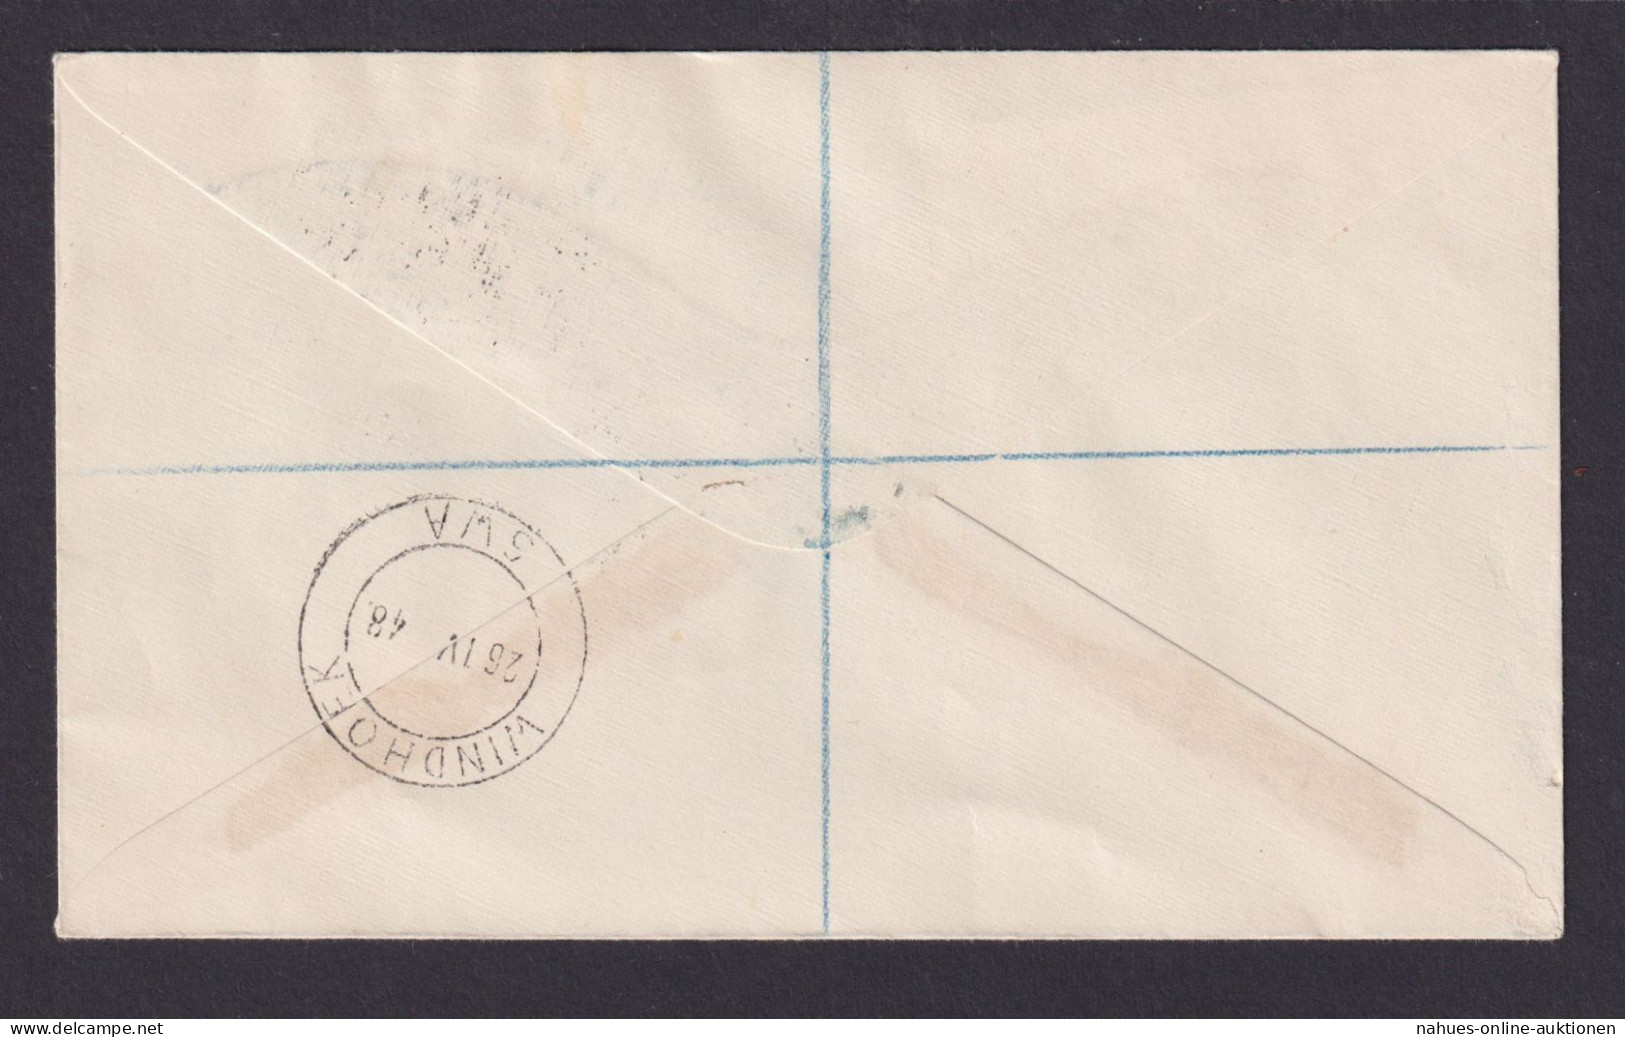 Südafrika Brief Silberhochzeit George VI + Elisabeth Viol. L1 Windhoek 1948 - Storia Postale